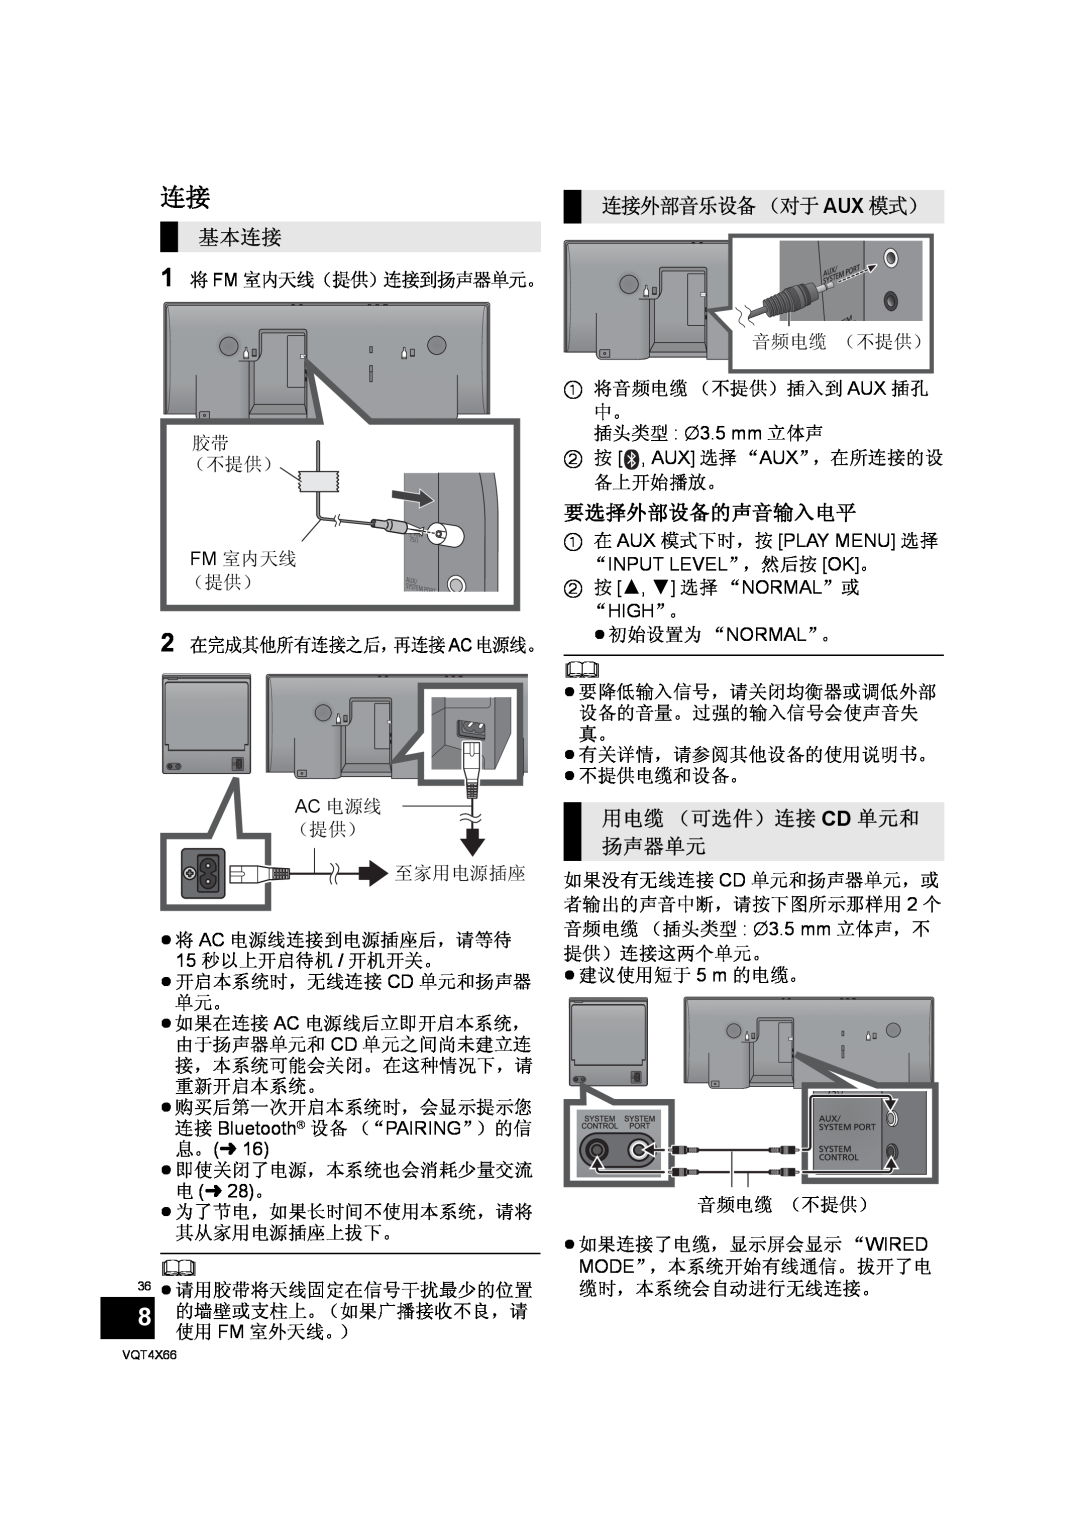 Panasonic SC-NE5 installation instructions 基本连接, 连接外部音乐设备（对于aux 模式）, 要选择外部设备的声音输入电平, 用电缆 （可选件）连接 Cd 单元和 扬声器单元 